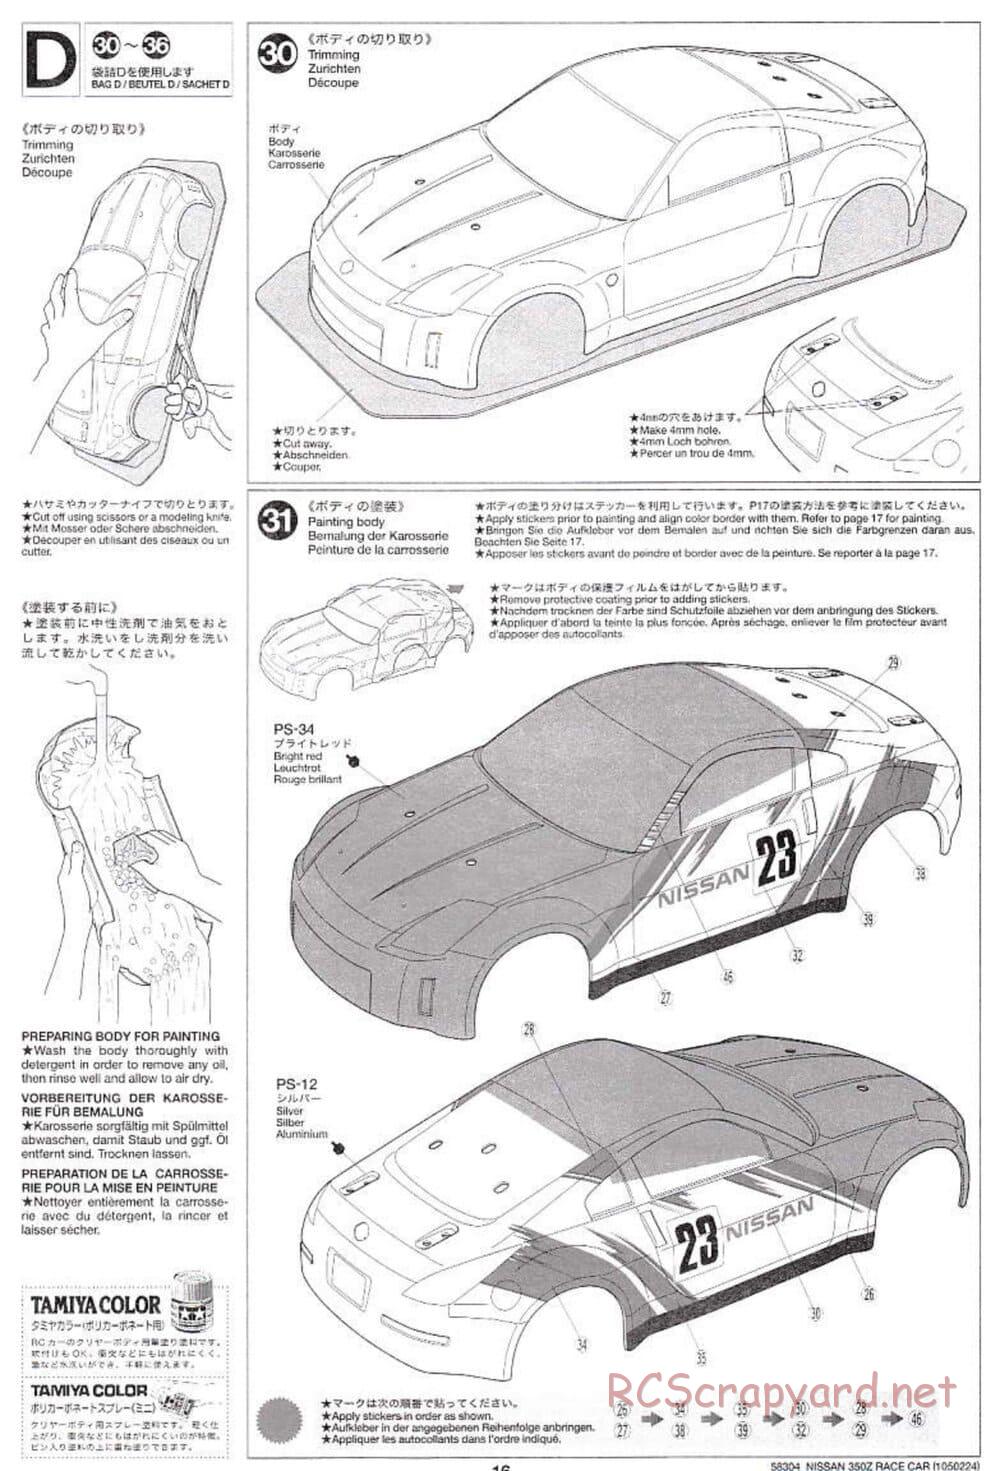 Tamiya - Nissan 350Z Race-Car - TT-01 Chassis - Manual - Page 16